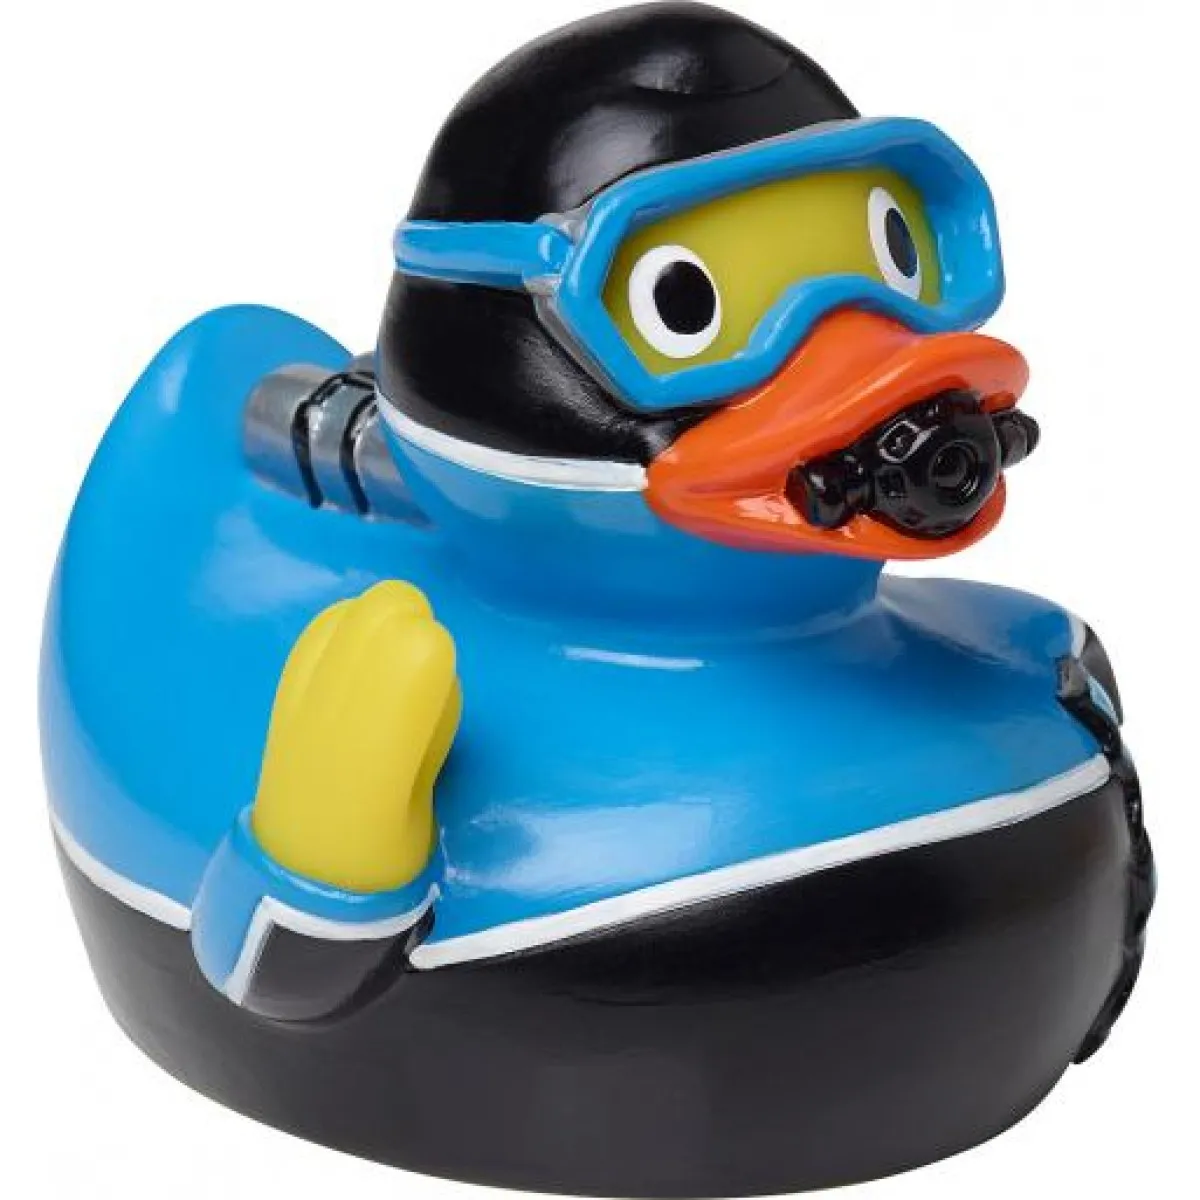 Bath duck - squeaky duck diver